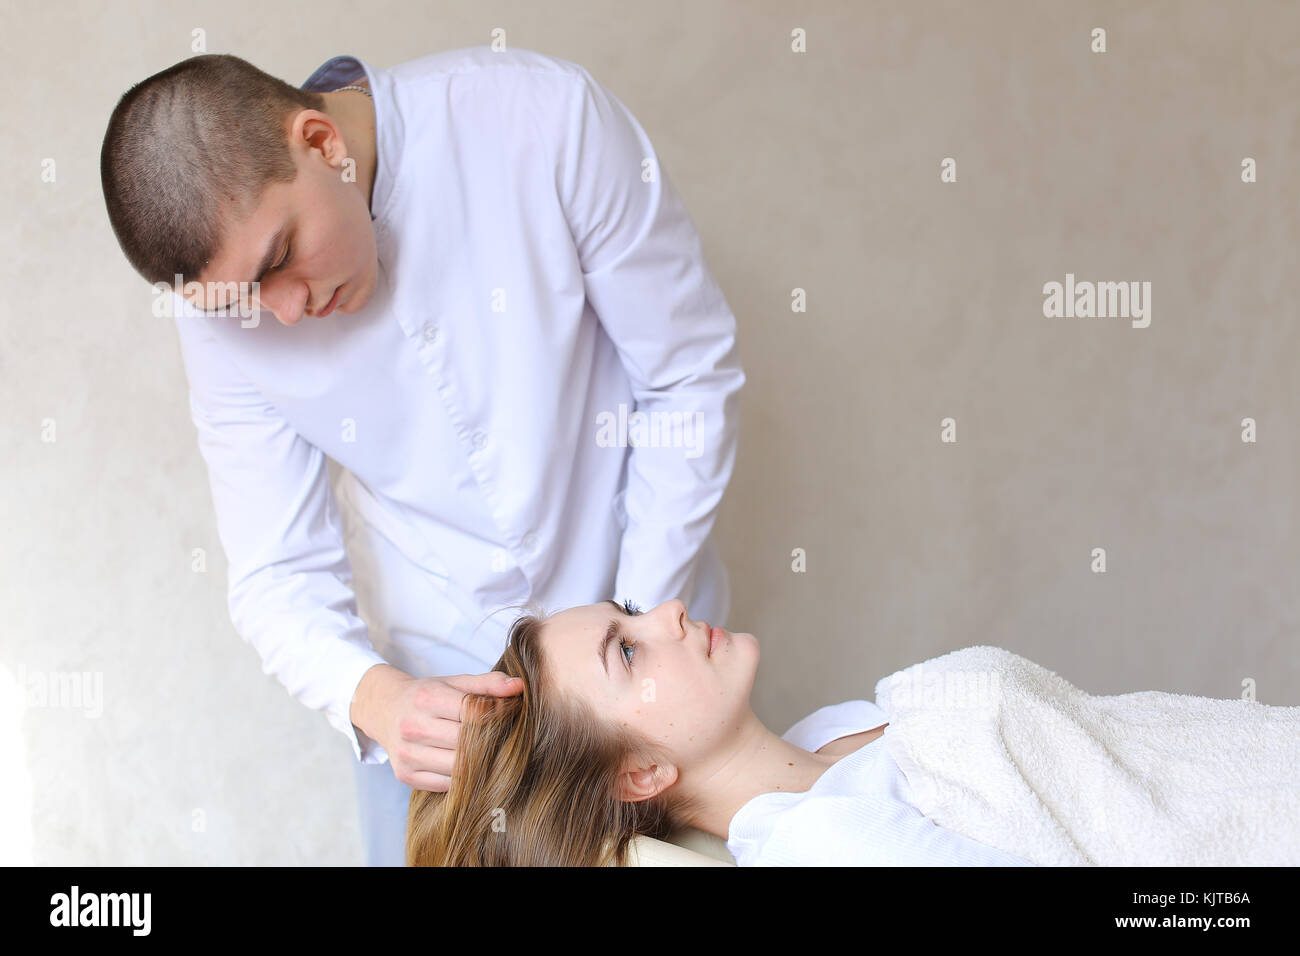 Girl Massage Boy